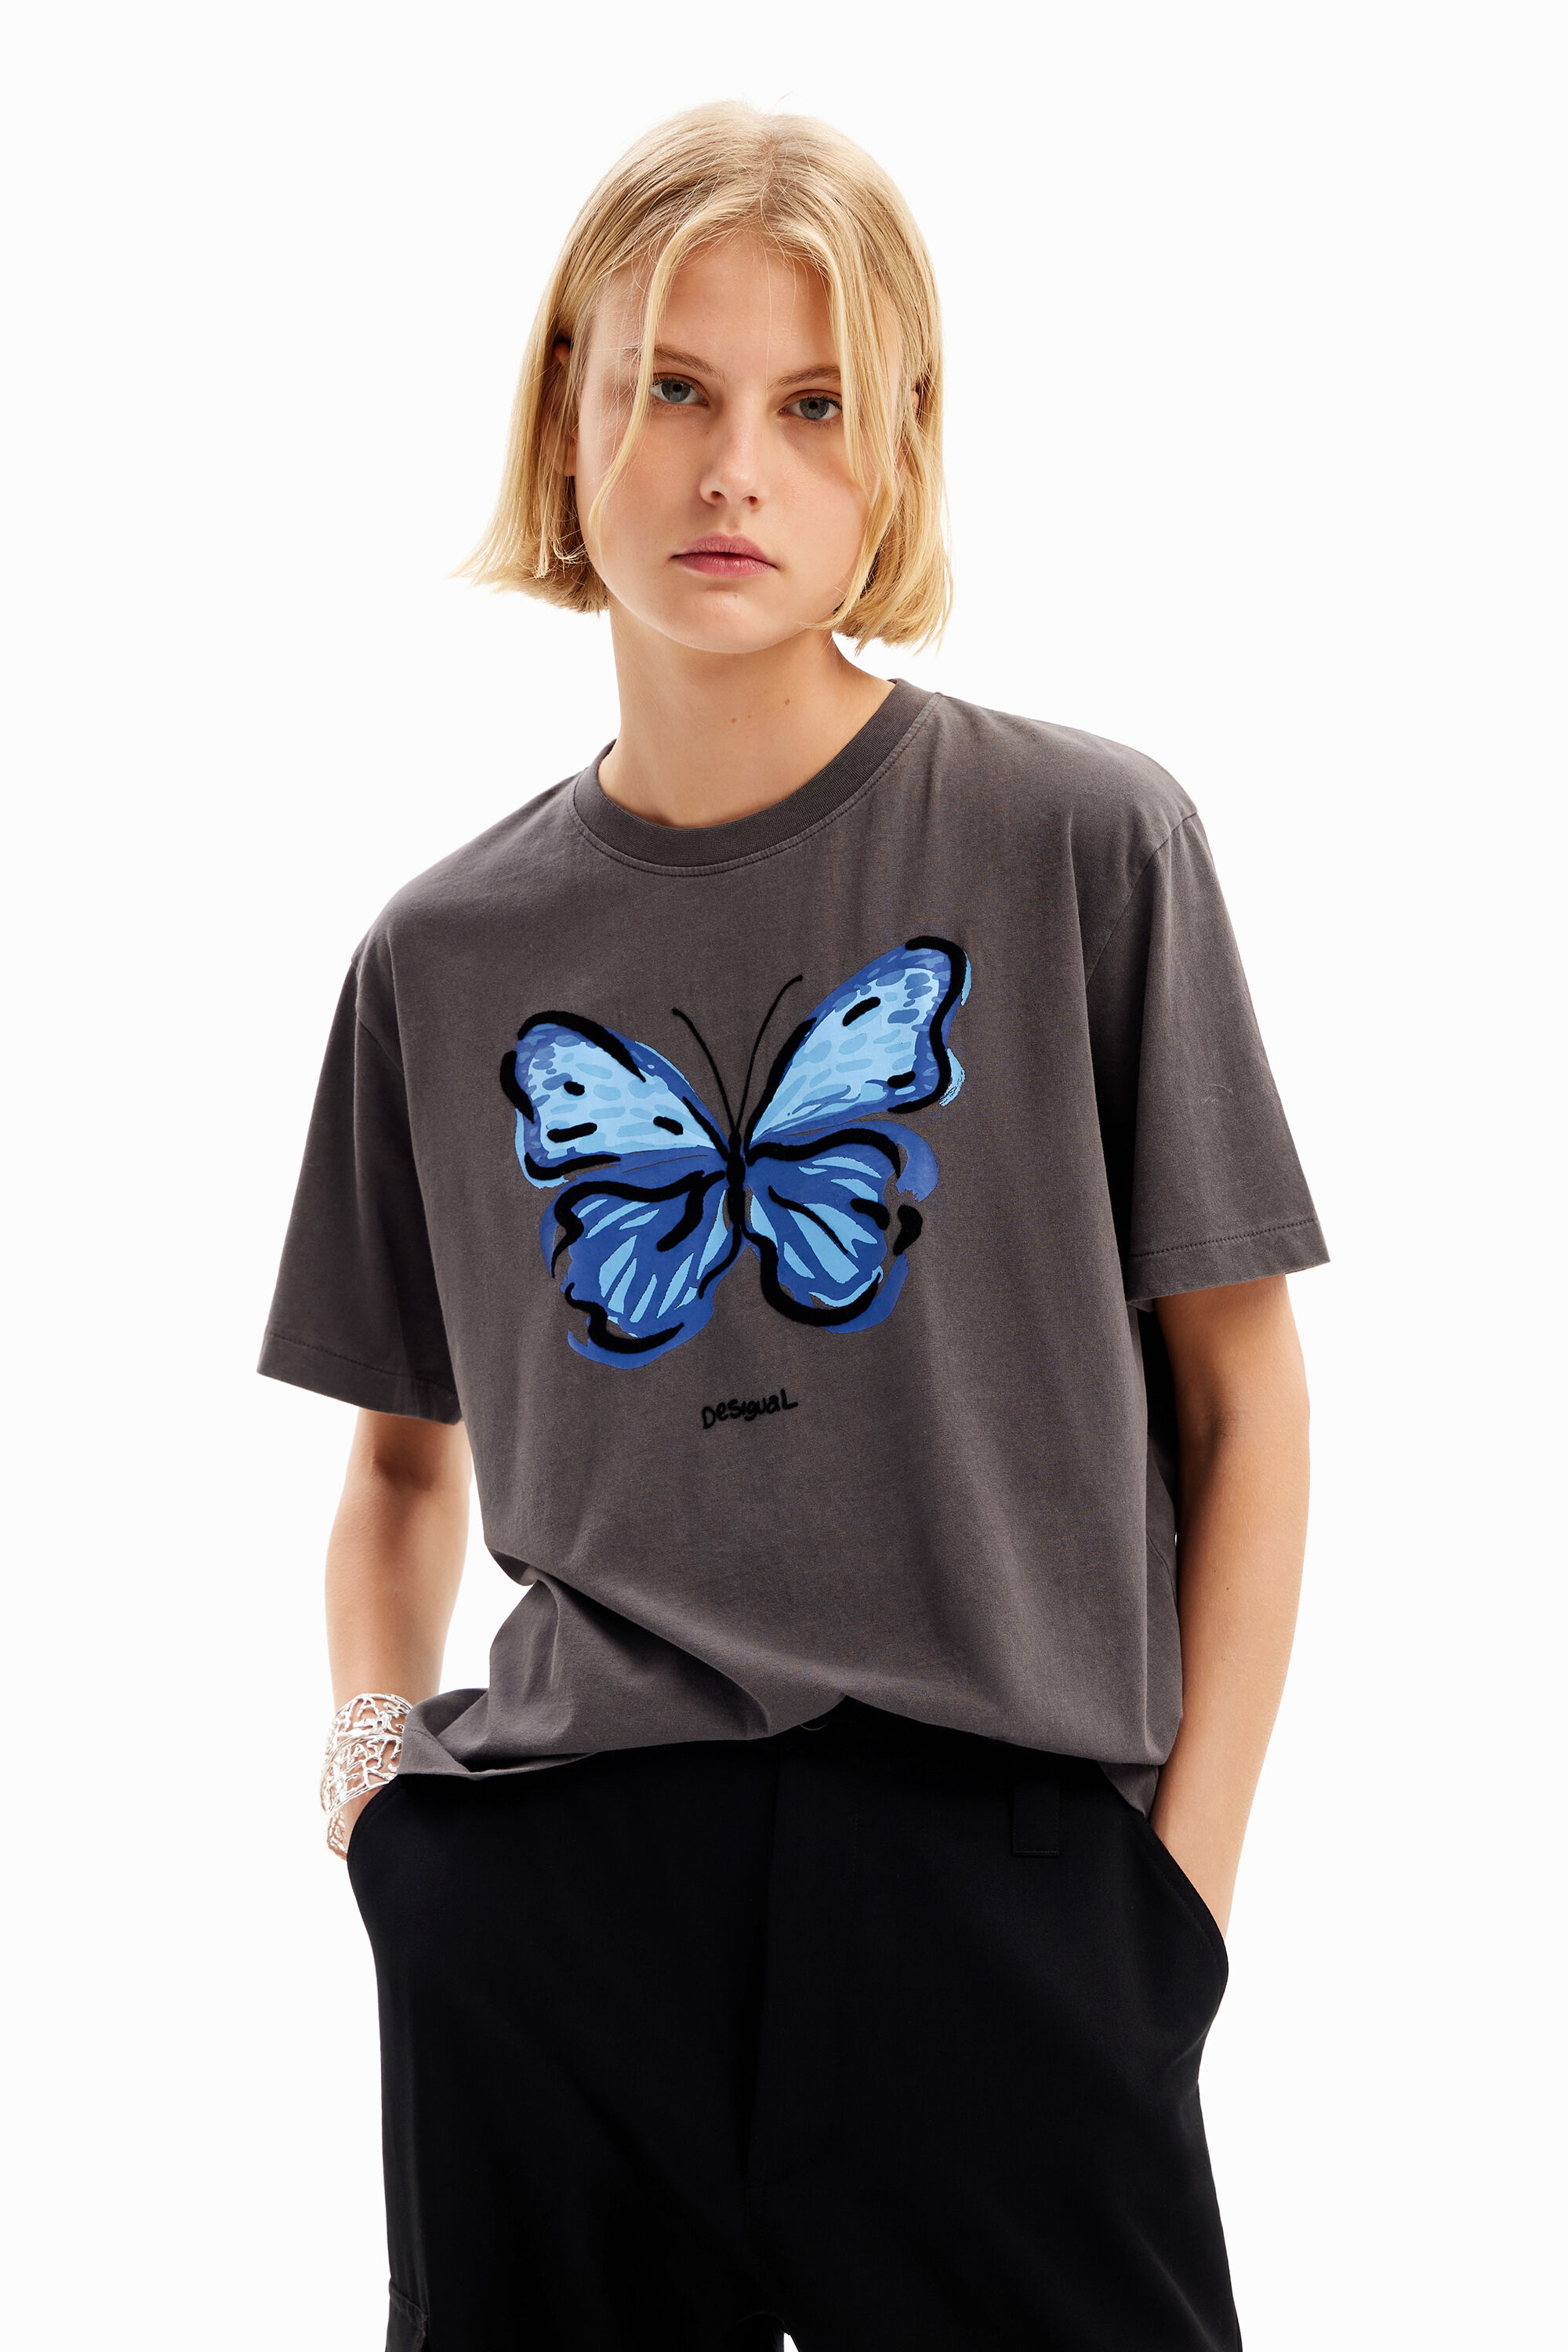 Butterfly illustration T-shirt - BLACK - S